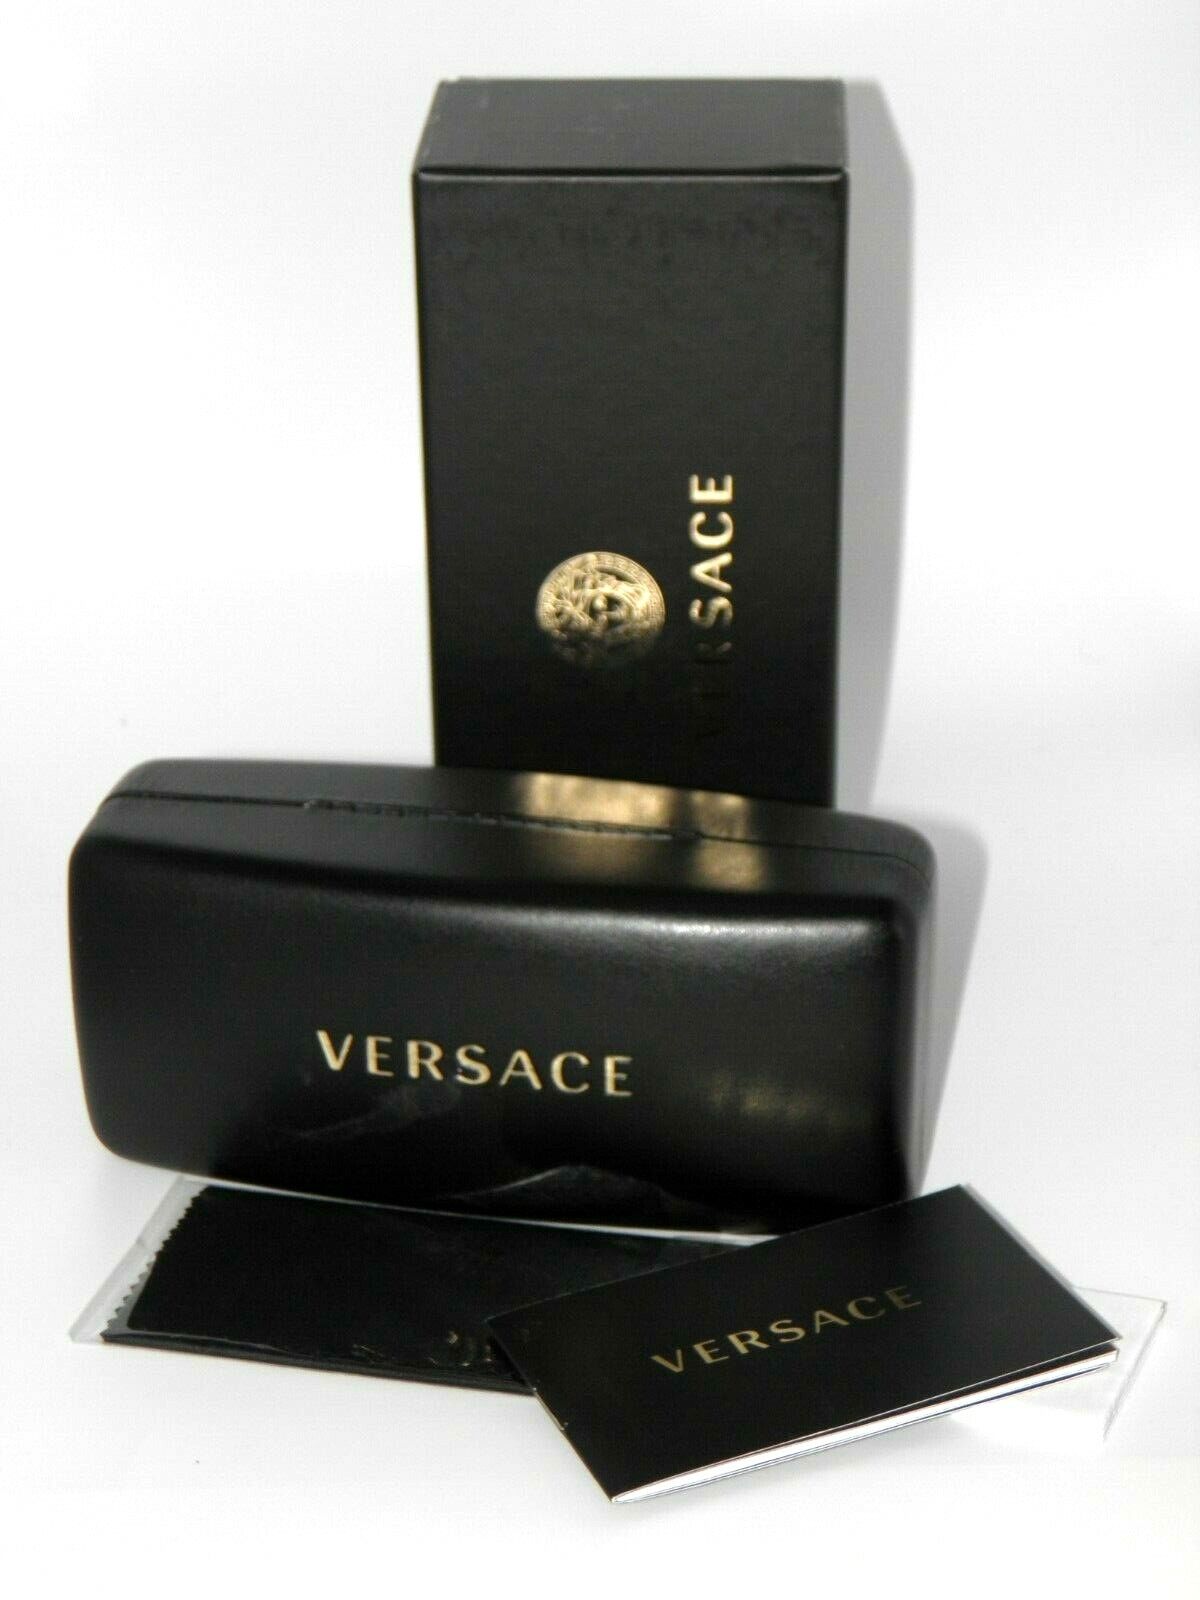 Versace Sunglasses Eyeglasses X-Large  Black Case Cloth Box 